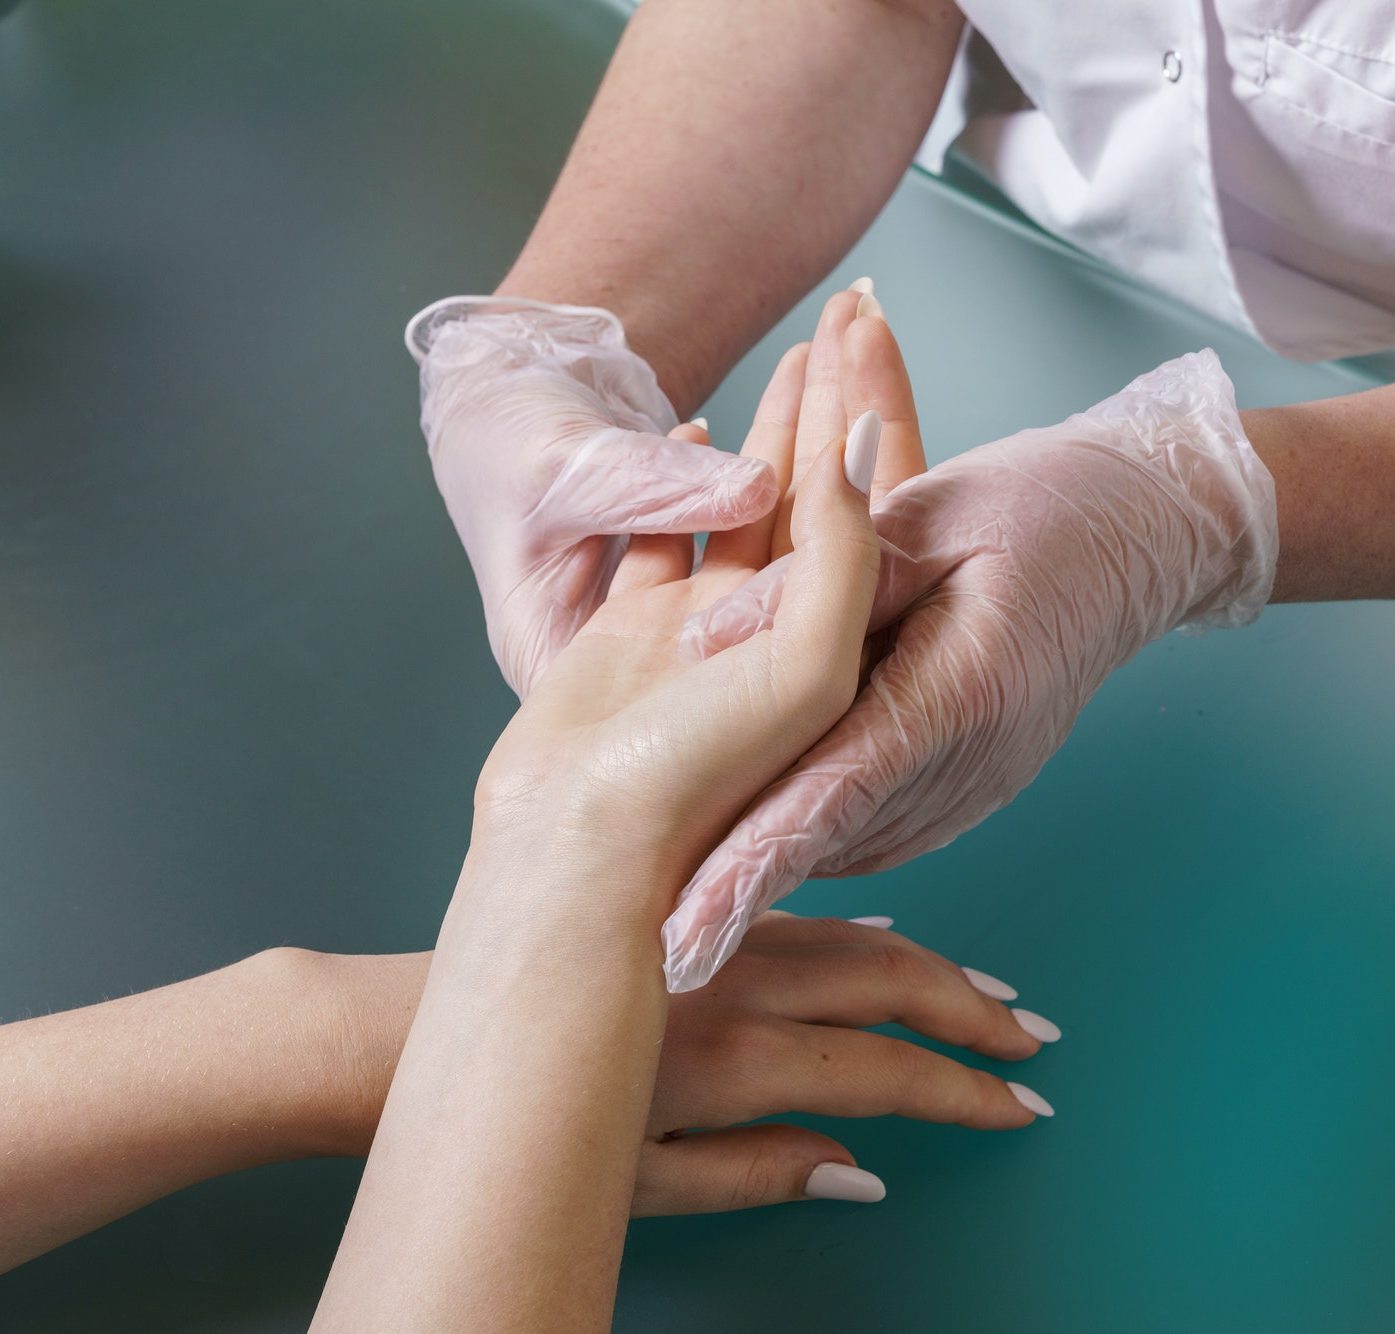 Manicurist does professional light hand massage after manicure procedure.